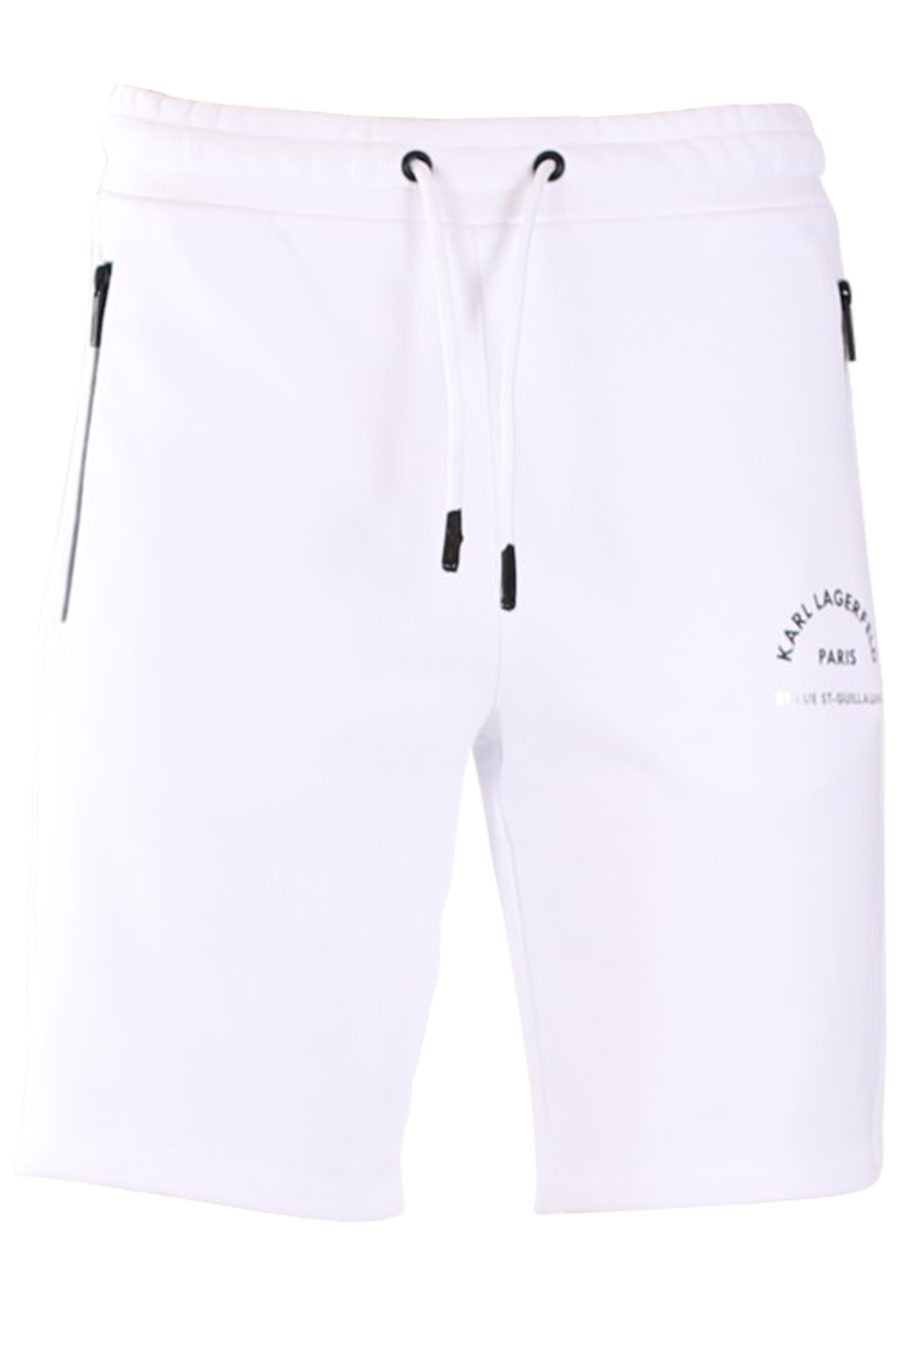 Pantalón corto blanco con logo plateado - 161e6ecd5881a9cc0b8224c90731bc5d5b3bfd27